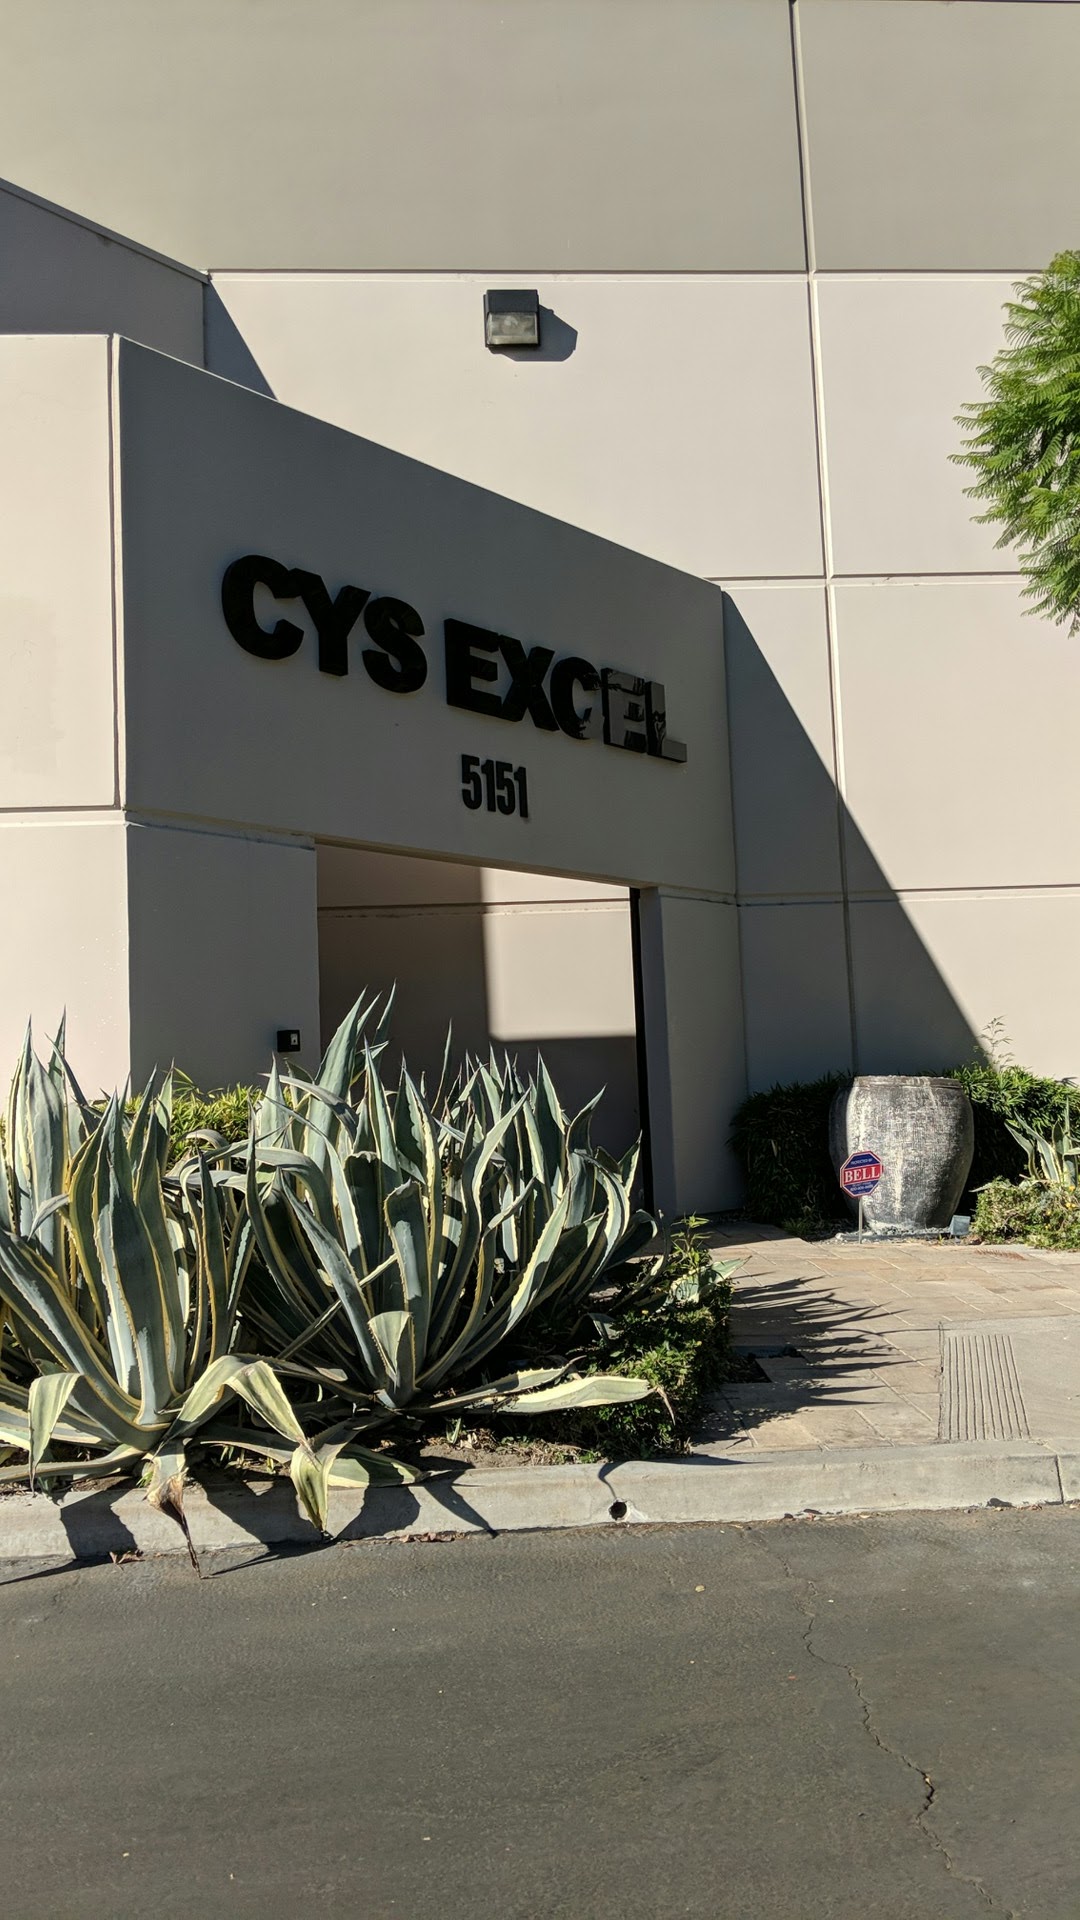 CYS Excel, Inc